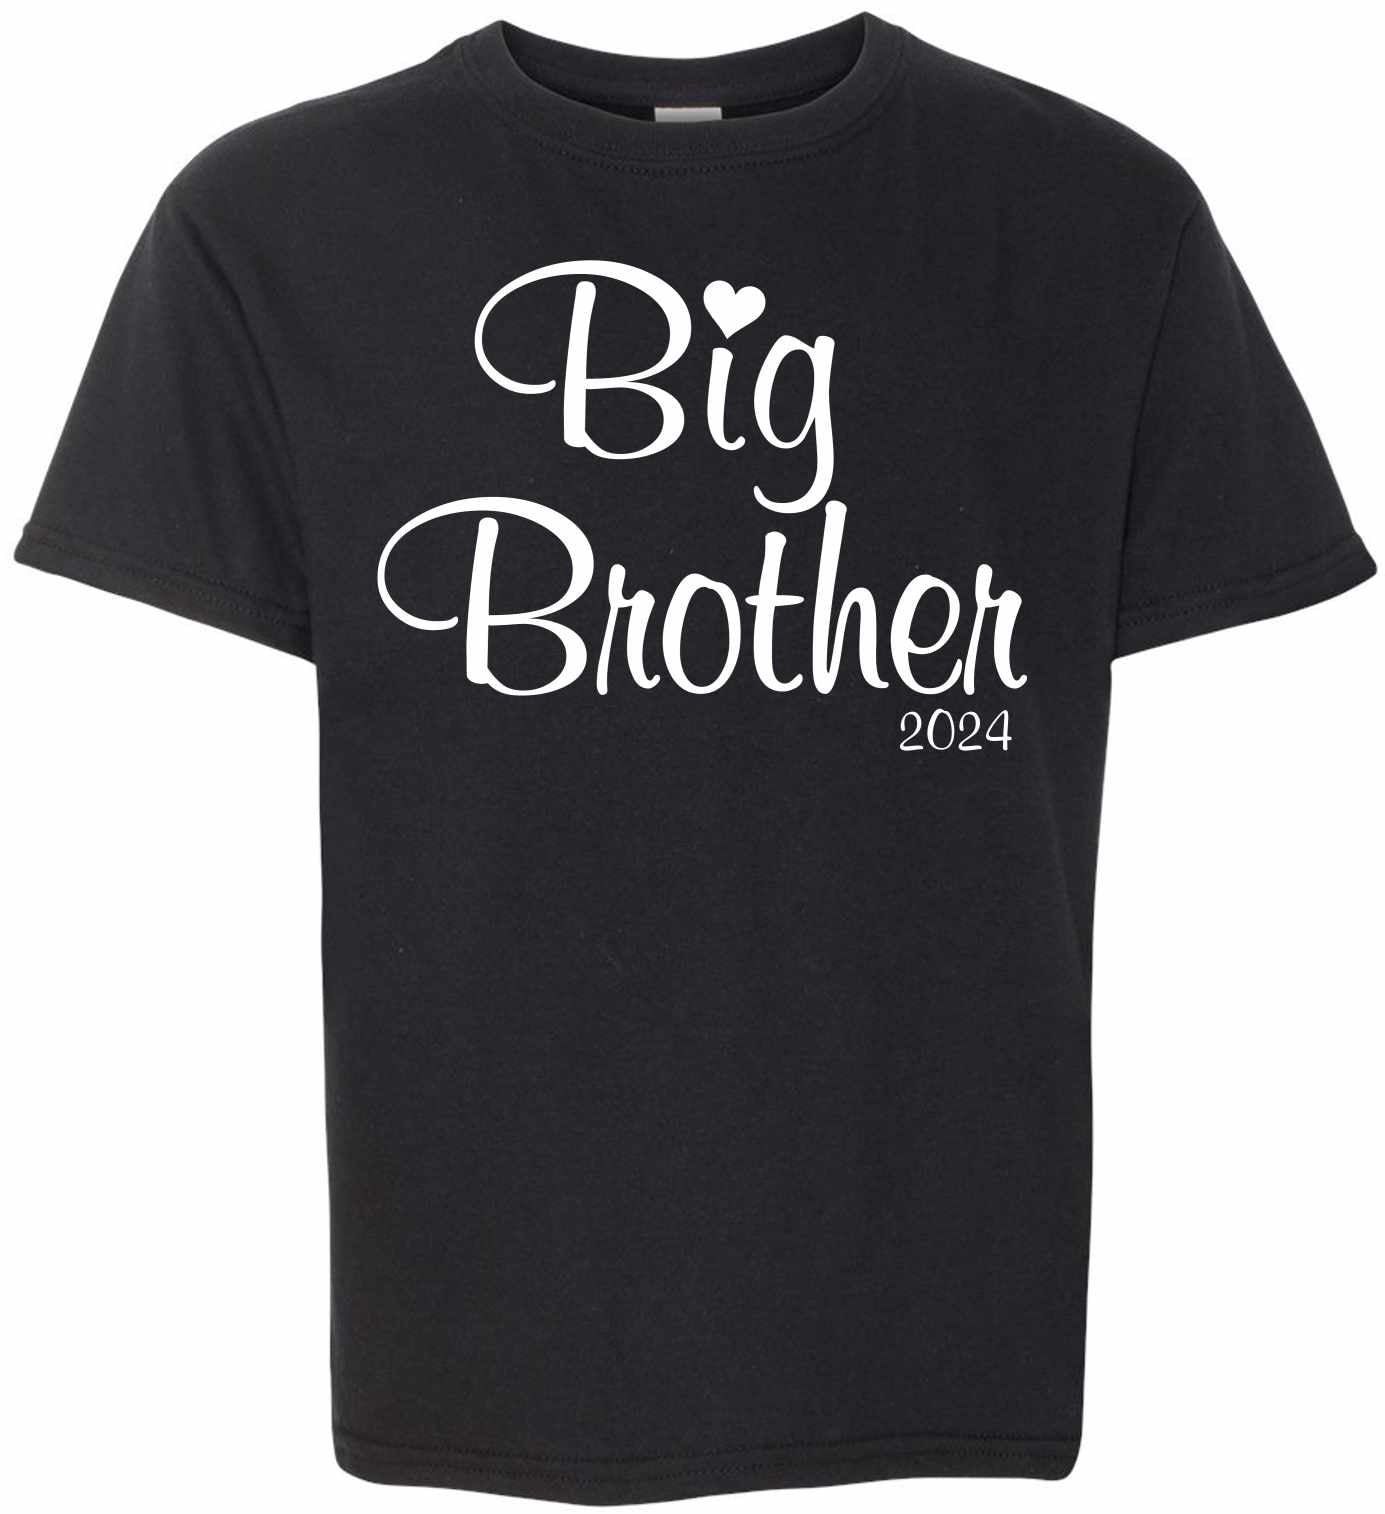 Big Brother 2024 on Kids T-Shirt